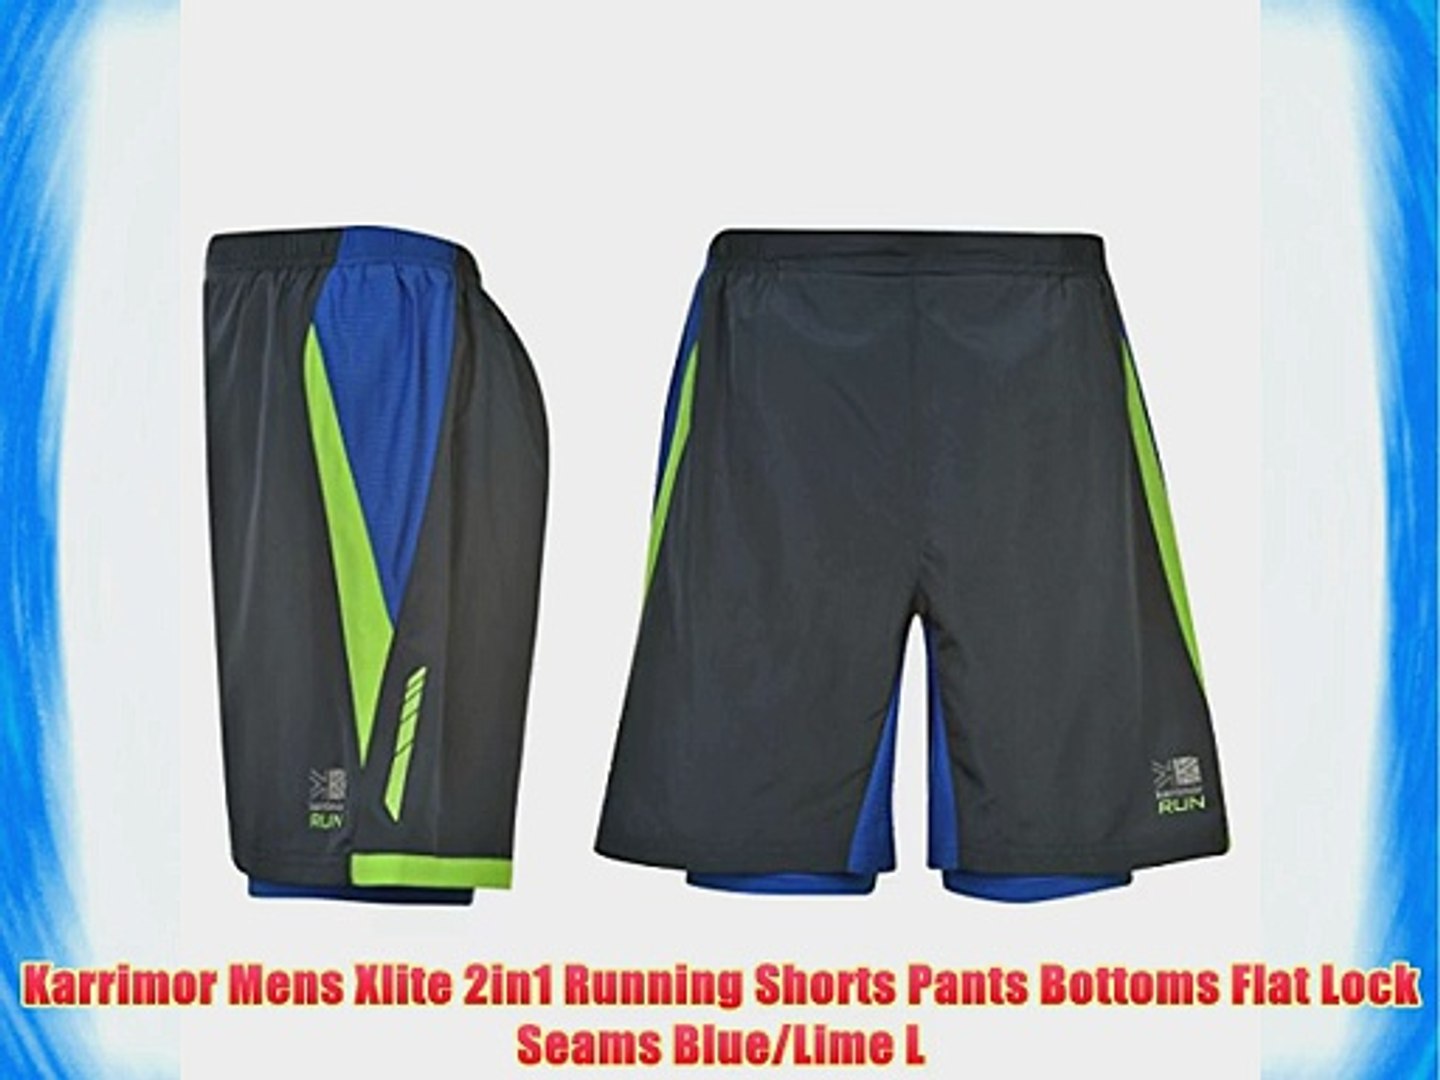 Karrimor Mens Xlite 2in1 Running Shorts Pants Bottoms Flat Lock